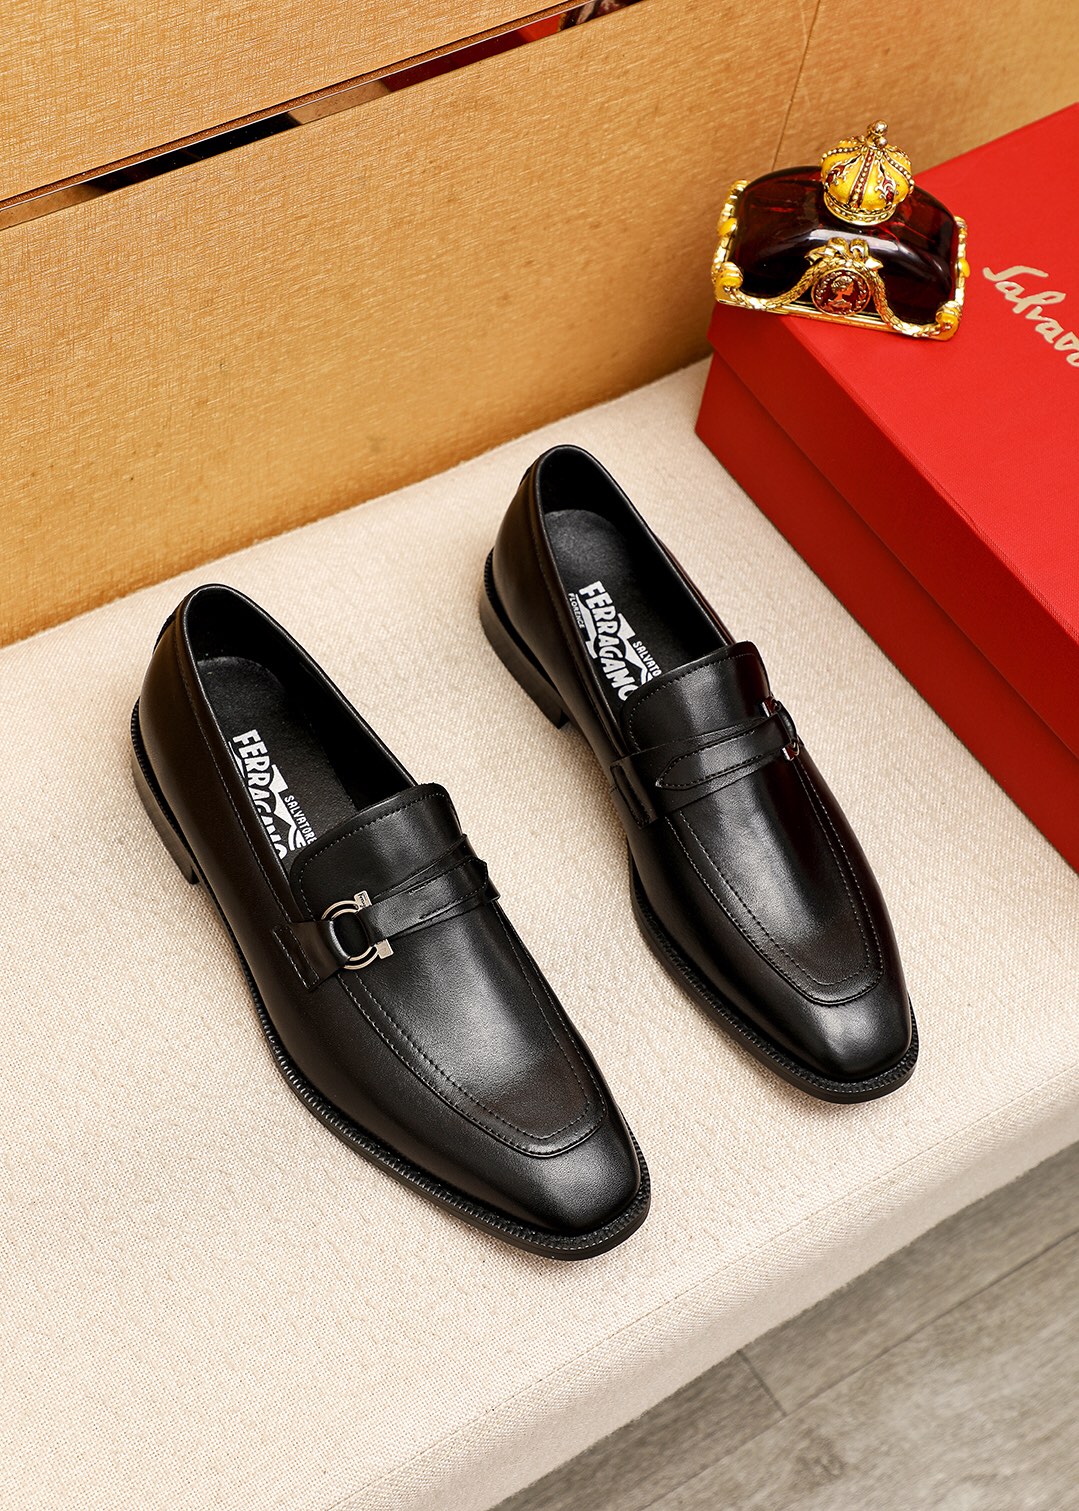 Product: Ferragamoo "Ferragamo" business leather shoes, regular size 39-44 (customized by 